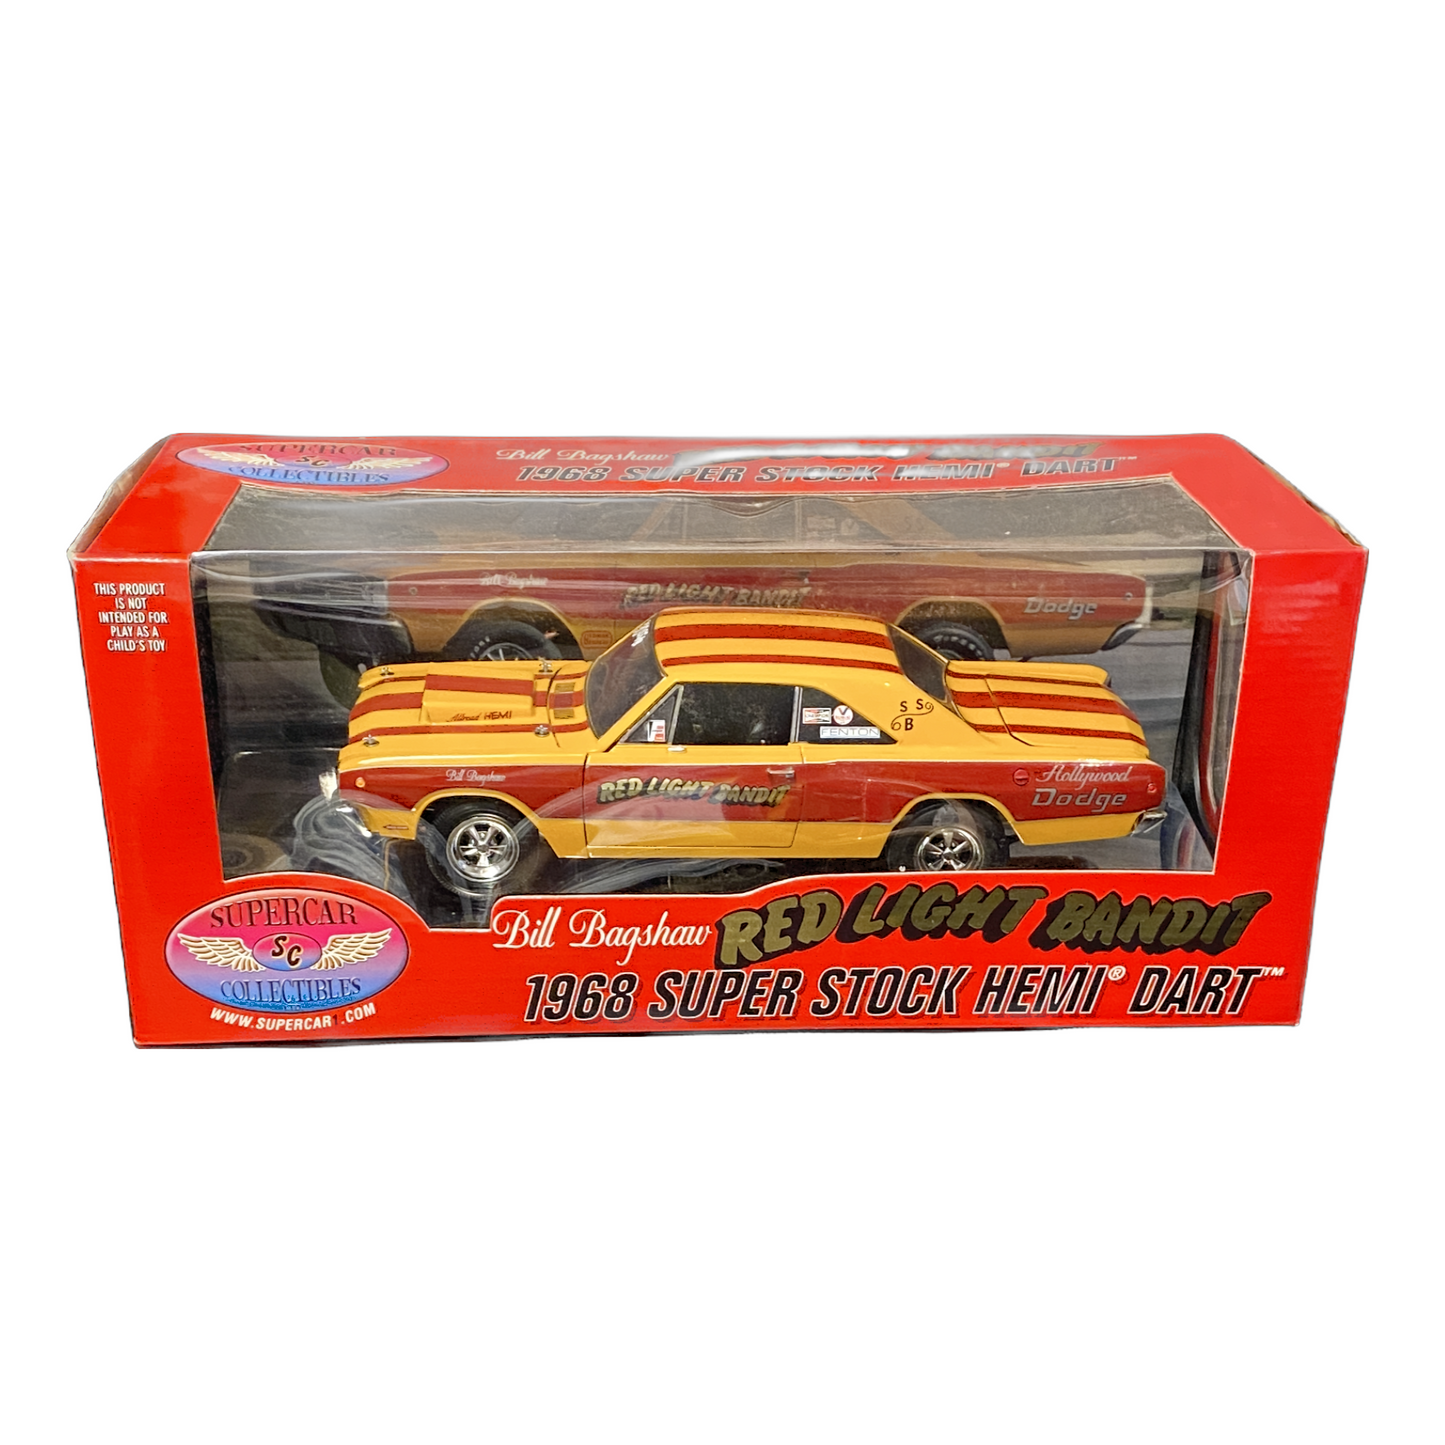 1/18 Scale 1968 Dodge Dart Bill Bagshaw "Red Light Bandit" Orange/Red/Race Graphics - Highway 61